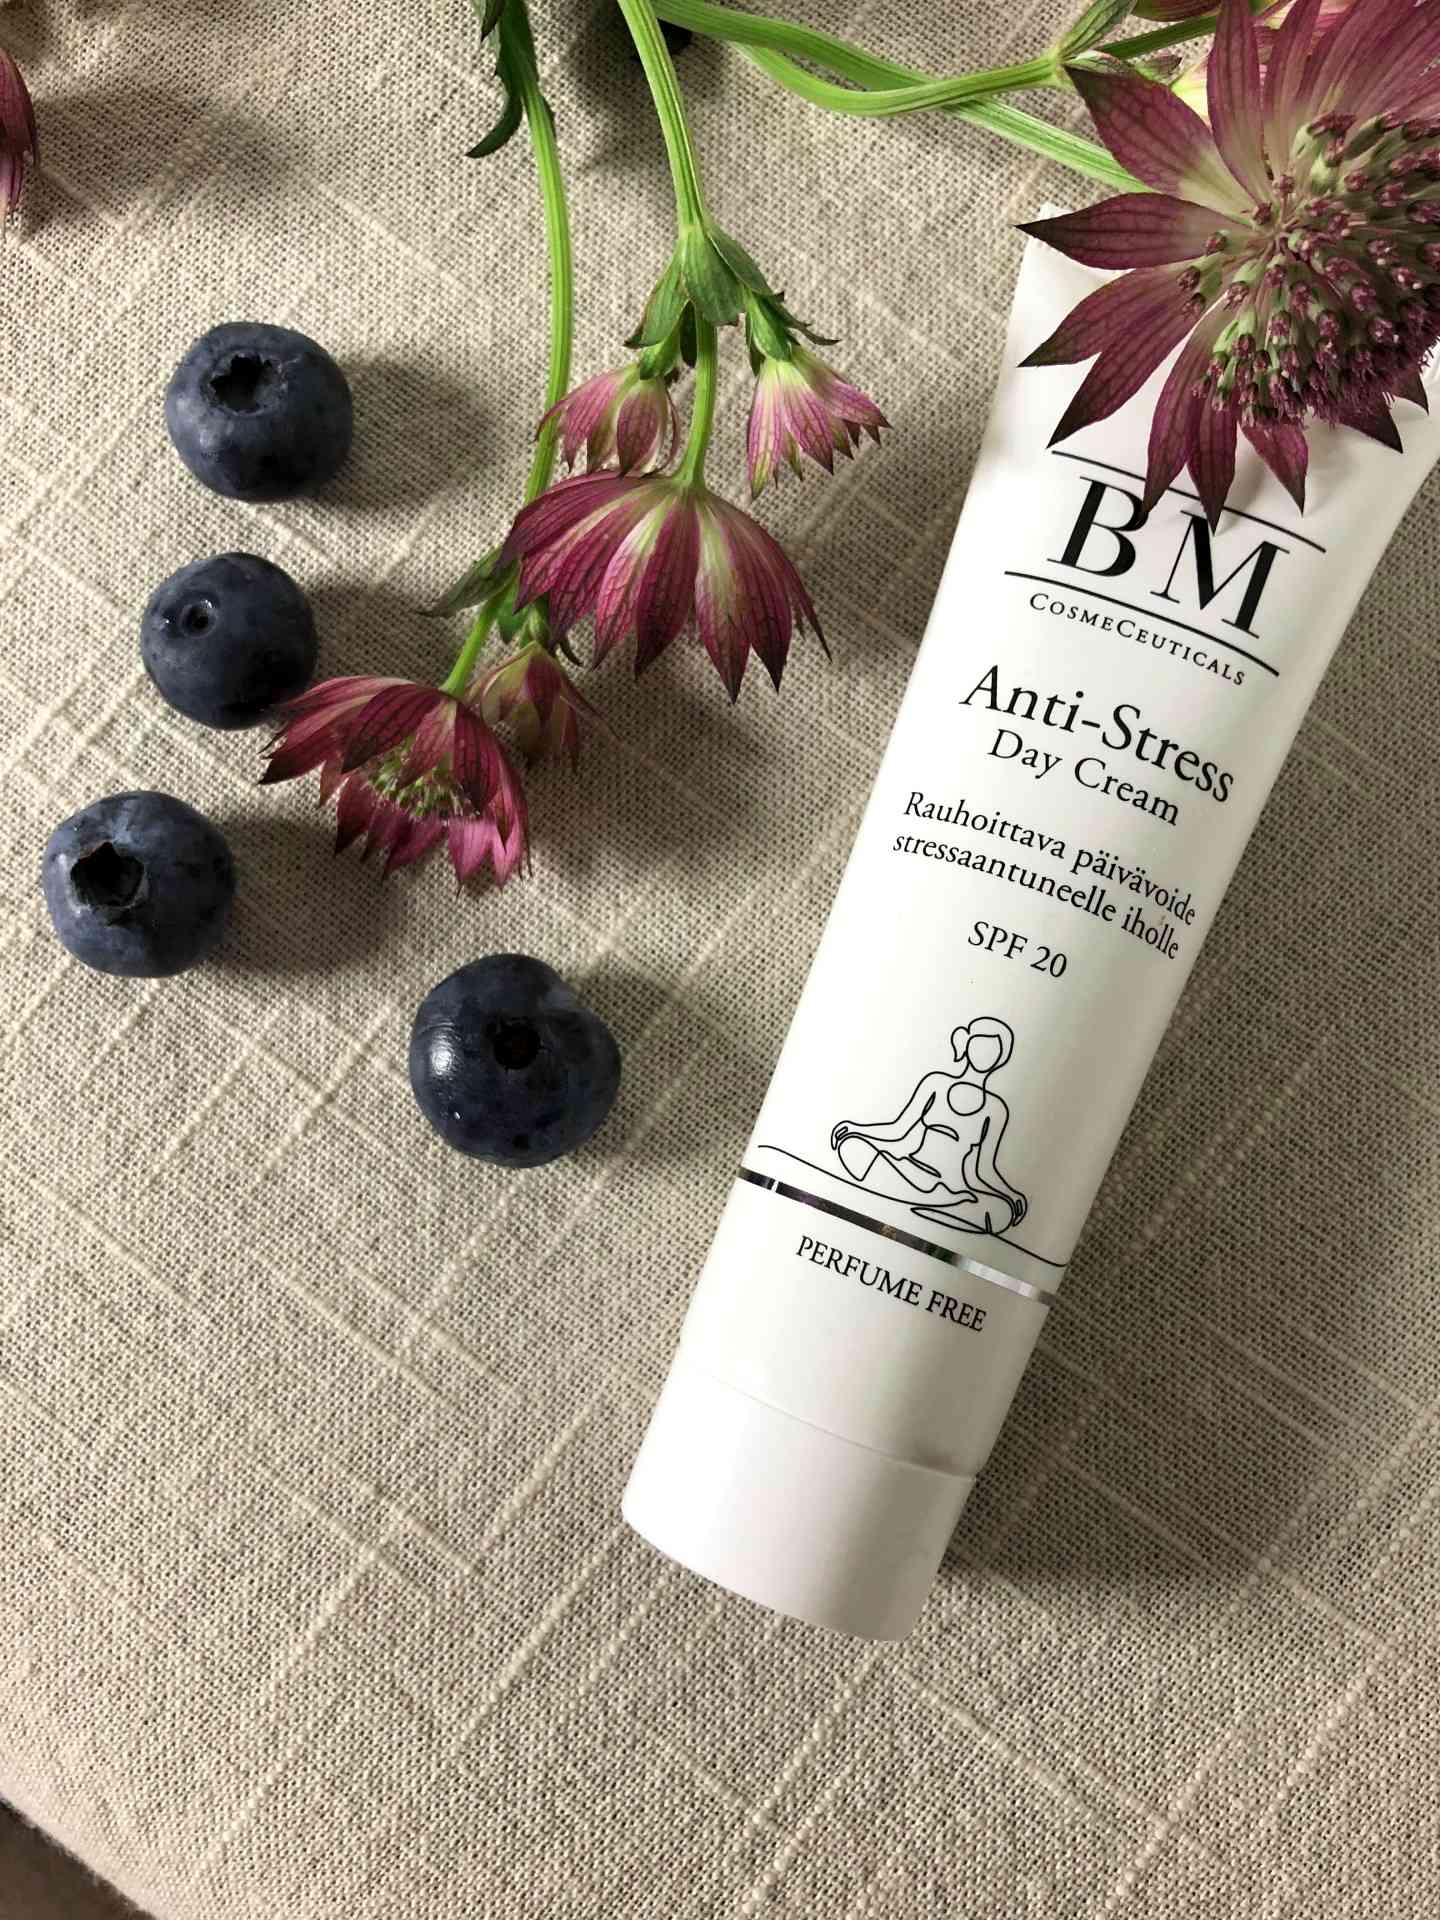 BM Anti-Stress cream